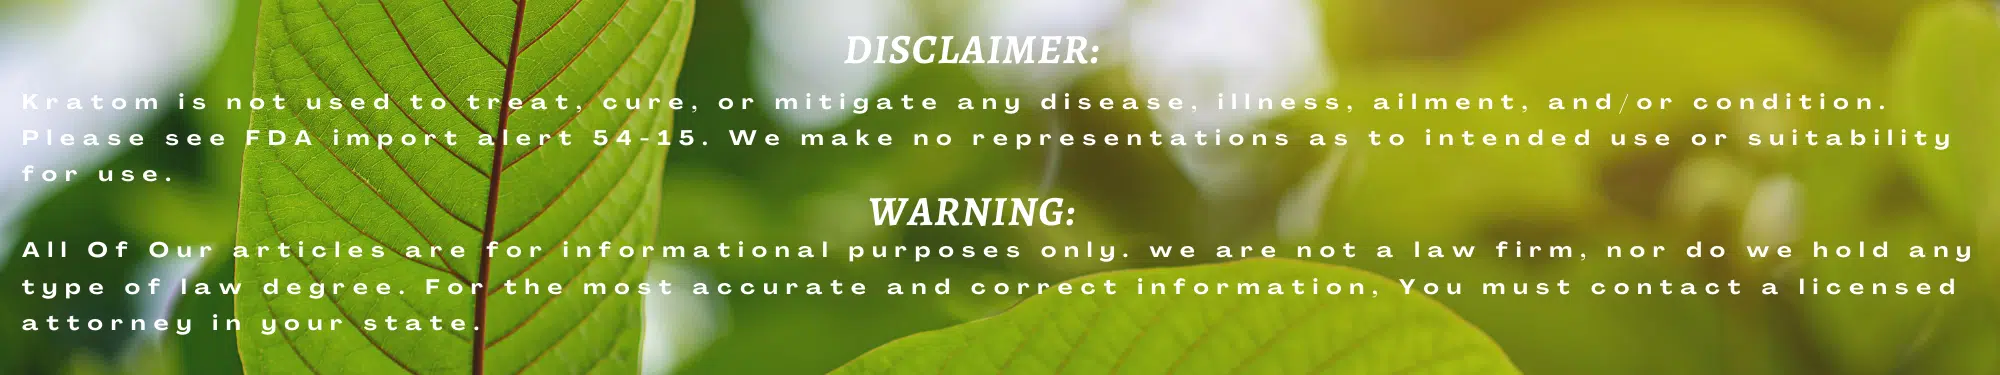 Disclaimer and Warning